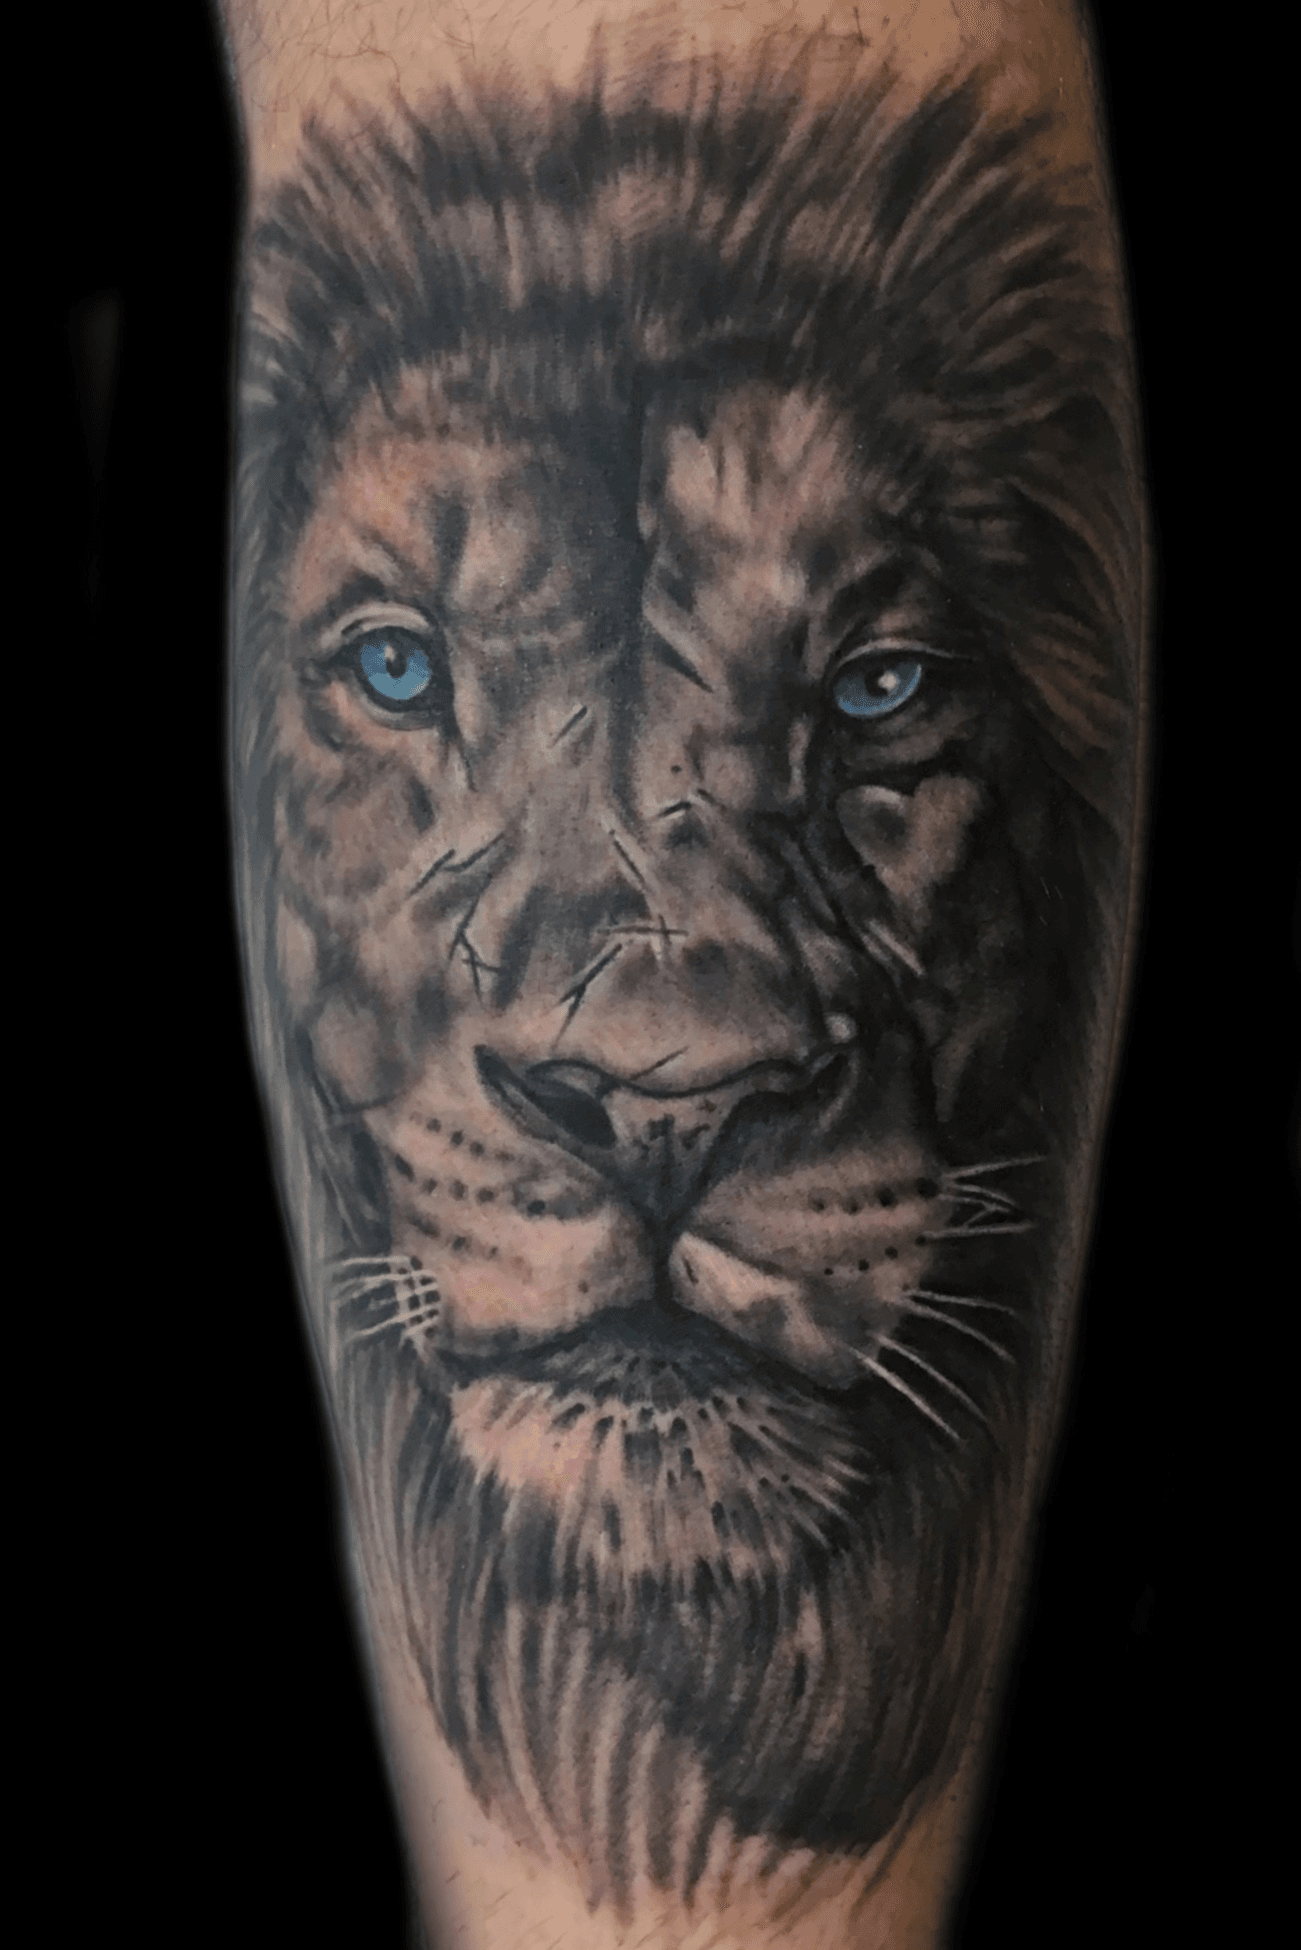 Battle scarred lion tattoo